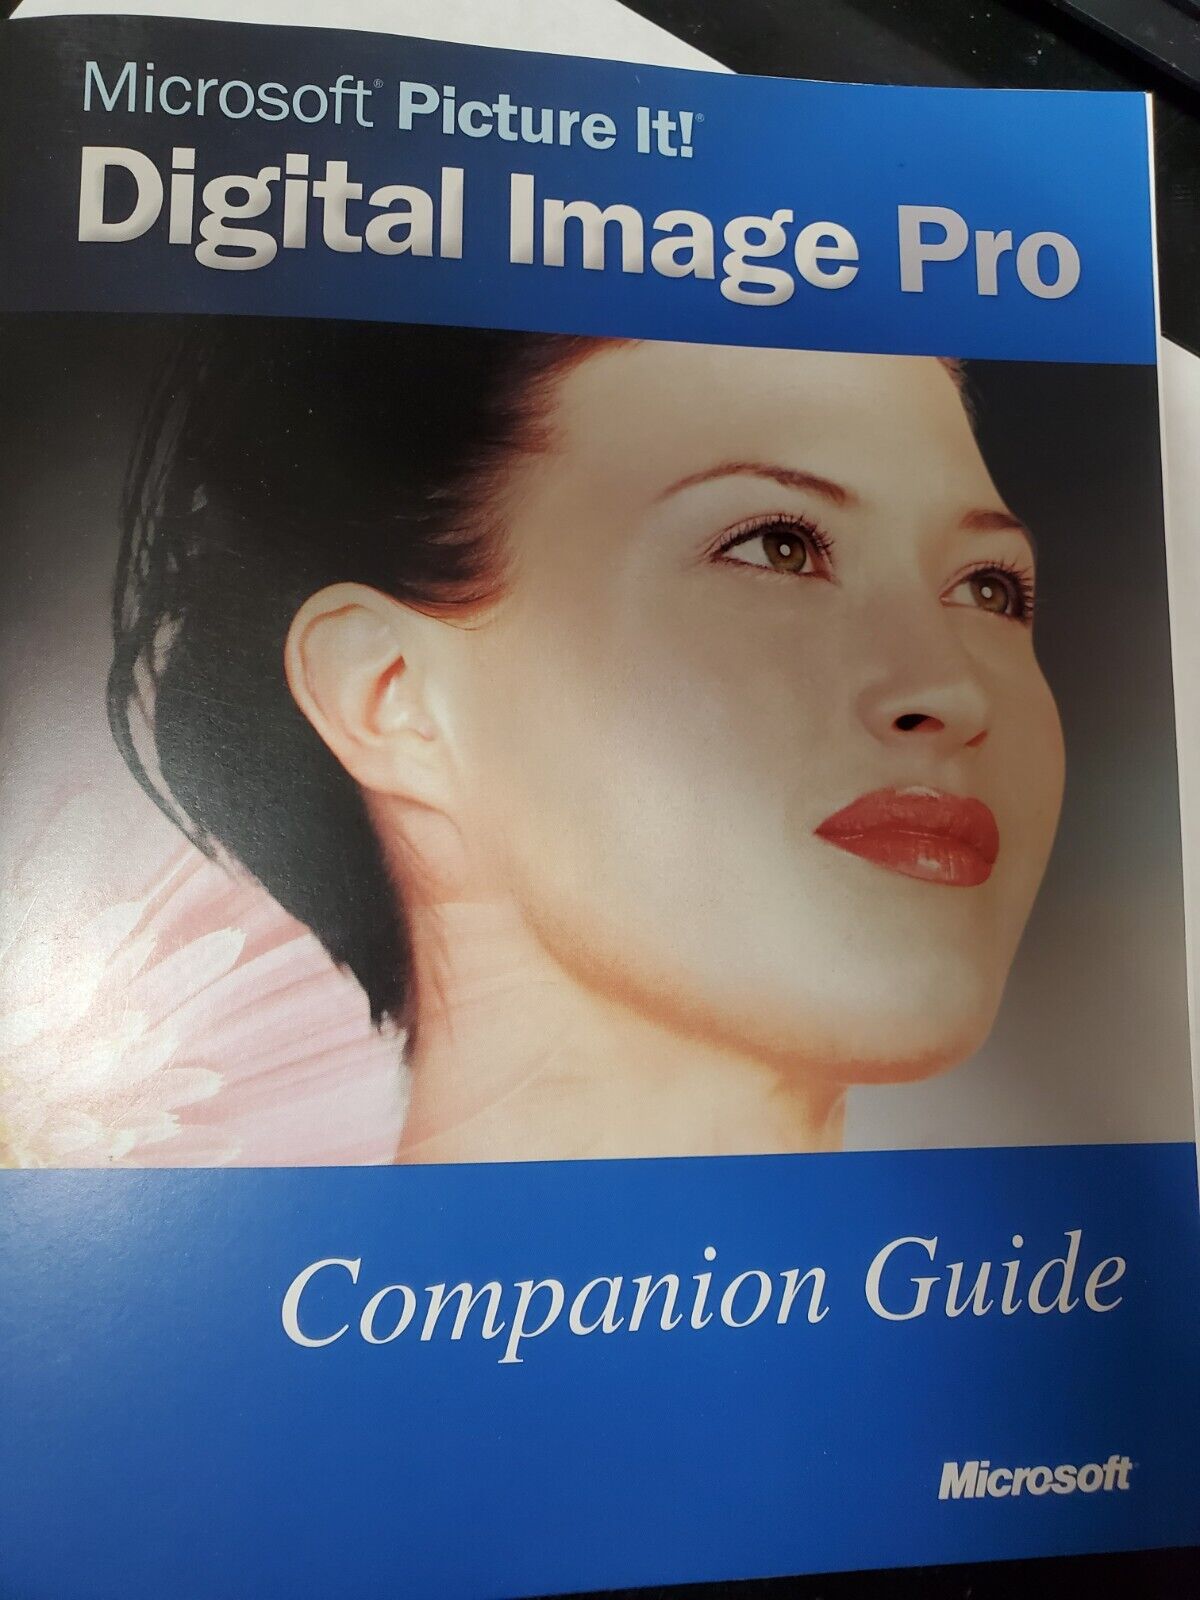 Microsoft Picture It Digital Image Pro 7.0  Companion Guide only, no media